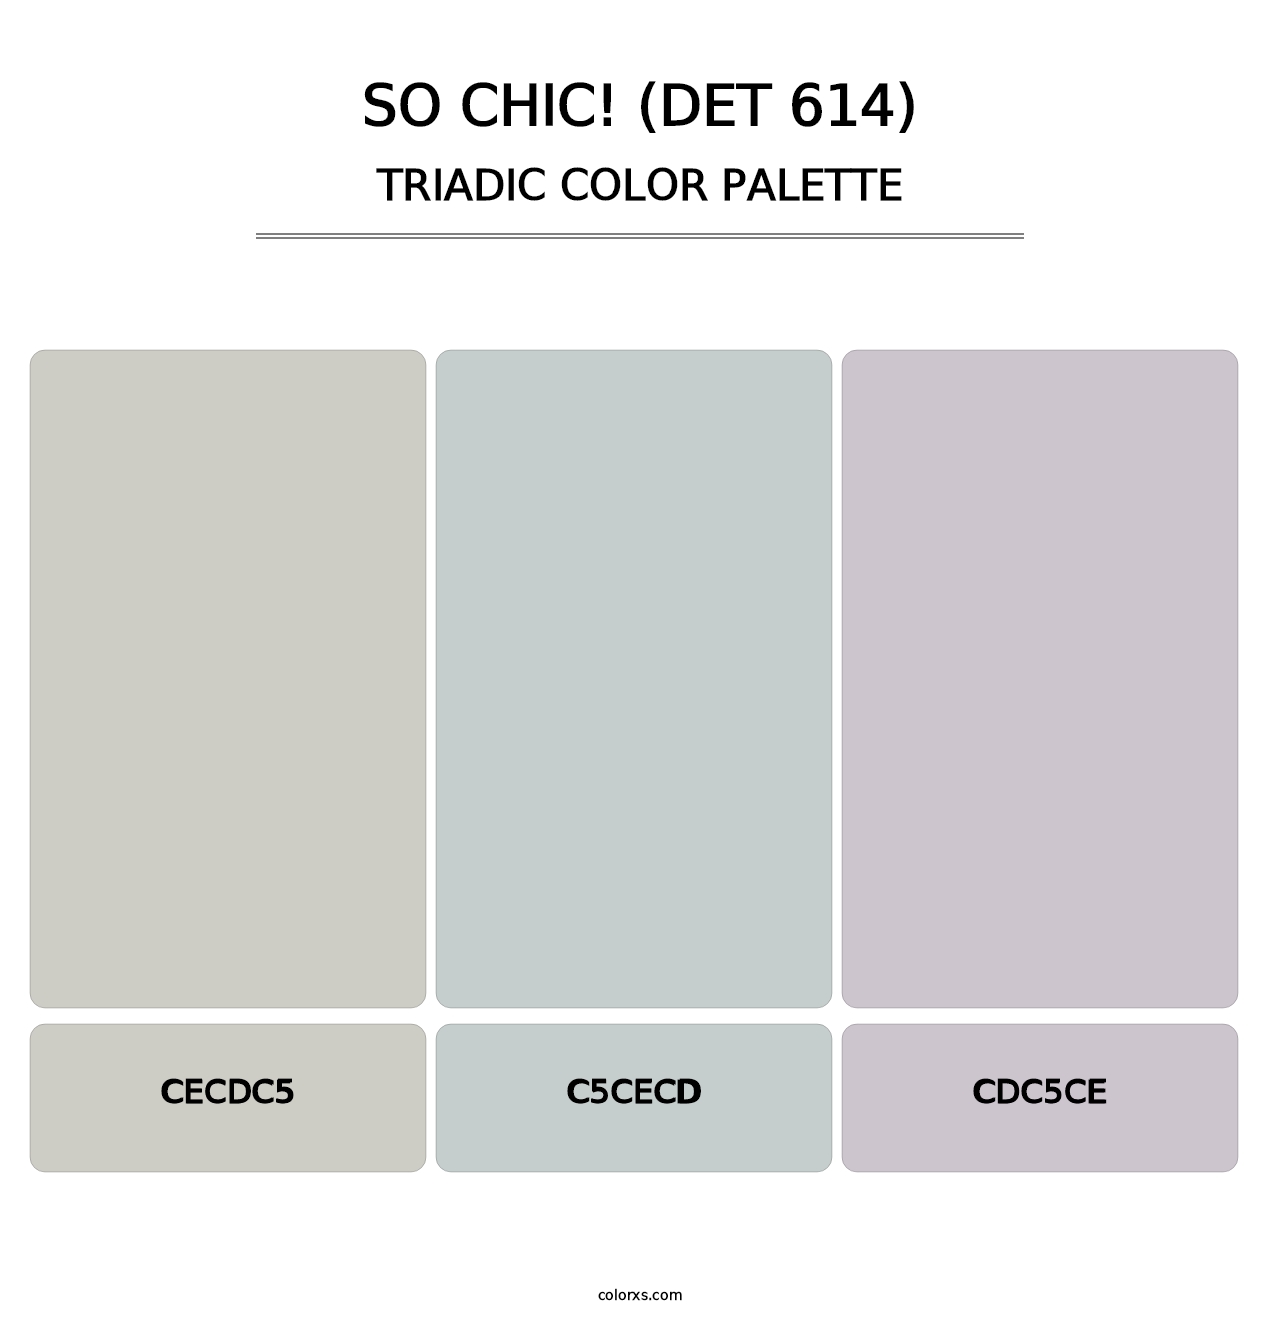 So Chic! (DET 614) - Triadic Color Palette